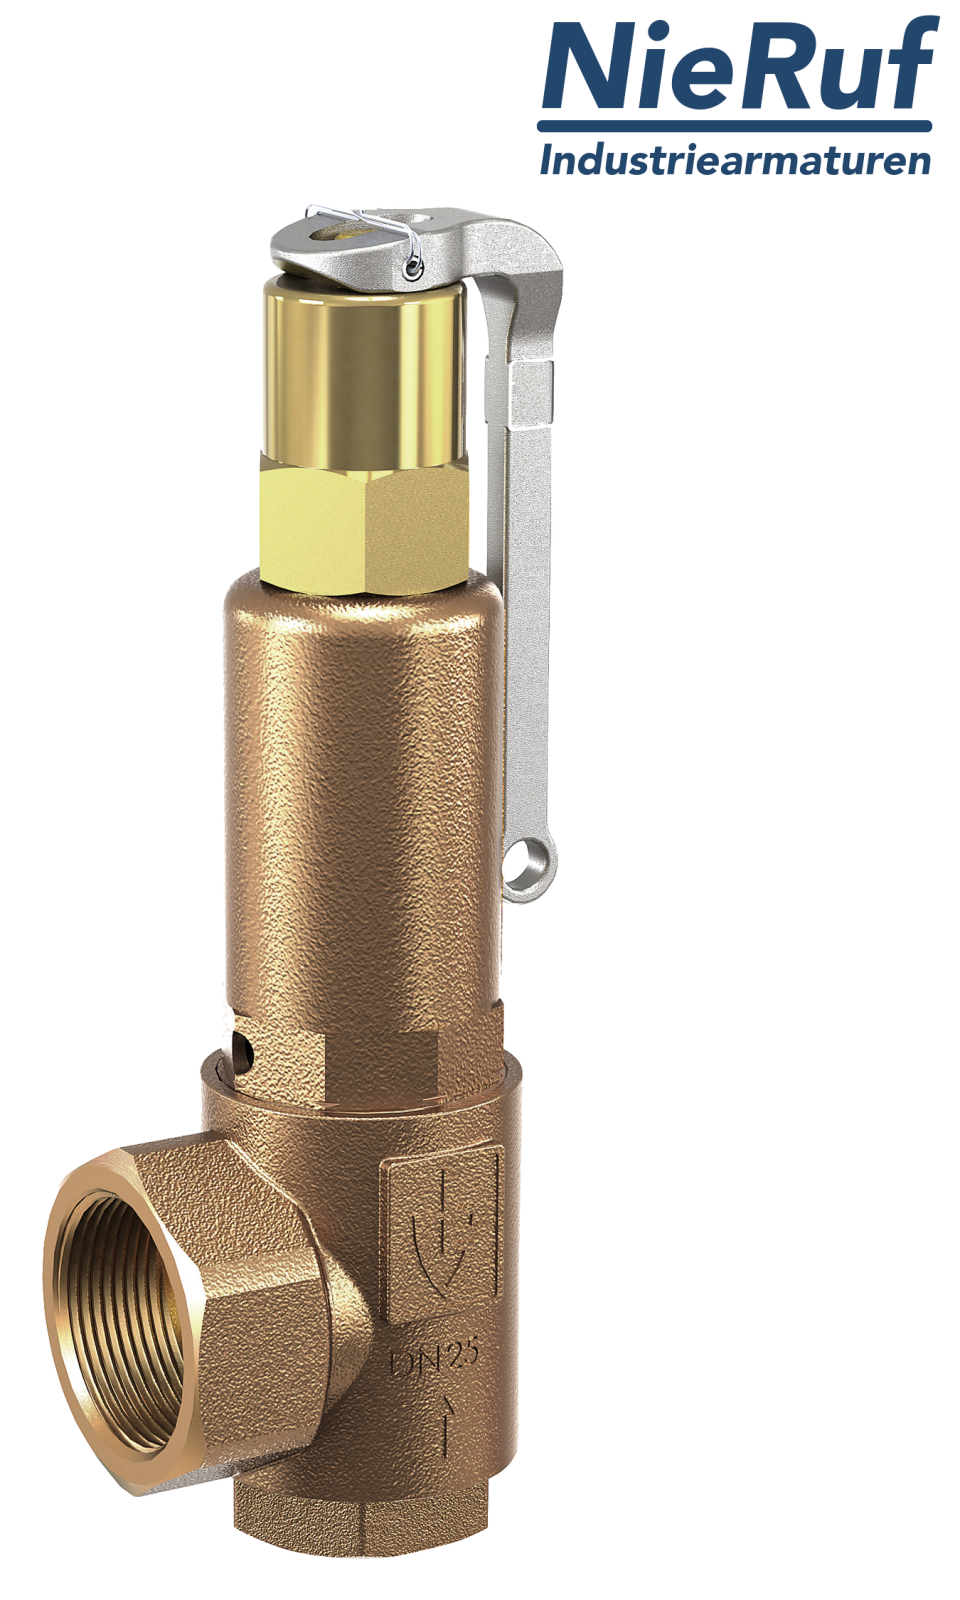 safety valve 2" x 2" fm SV03 neutral liquid media, gunmetal NBR, with lever